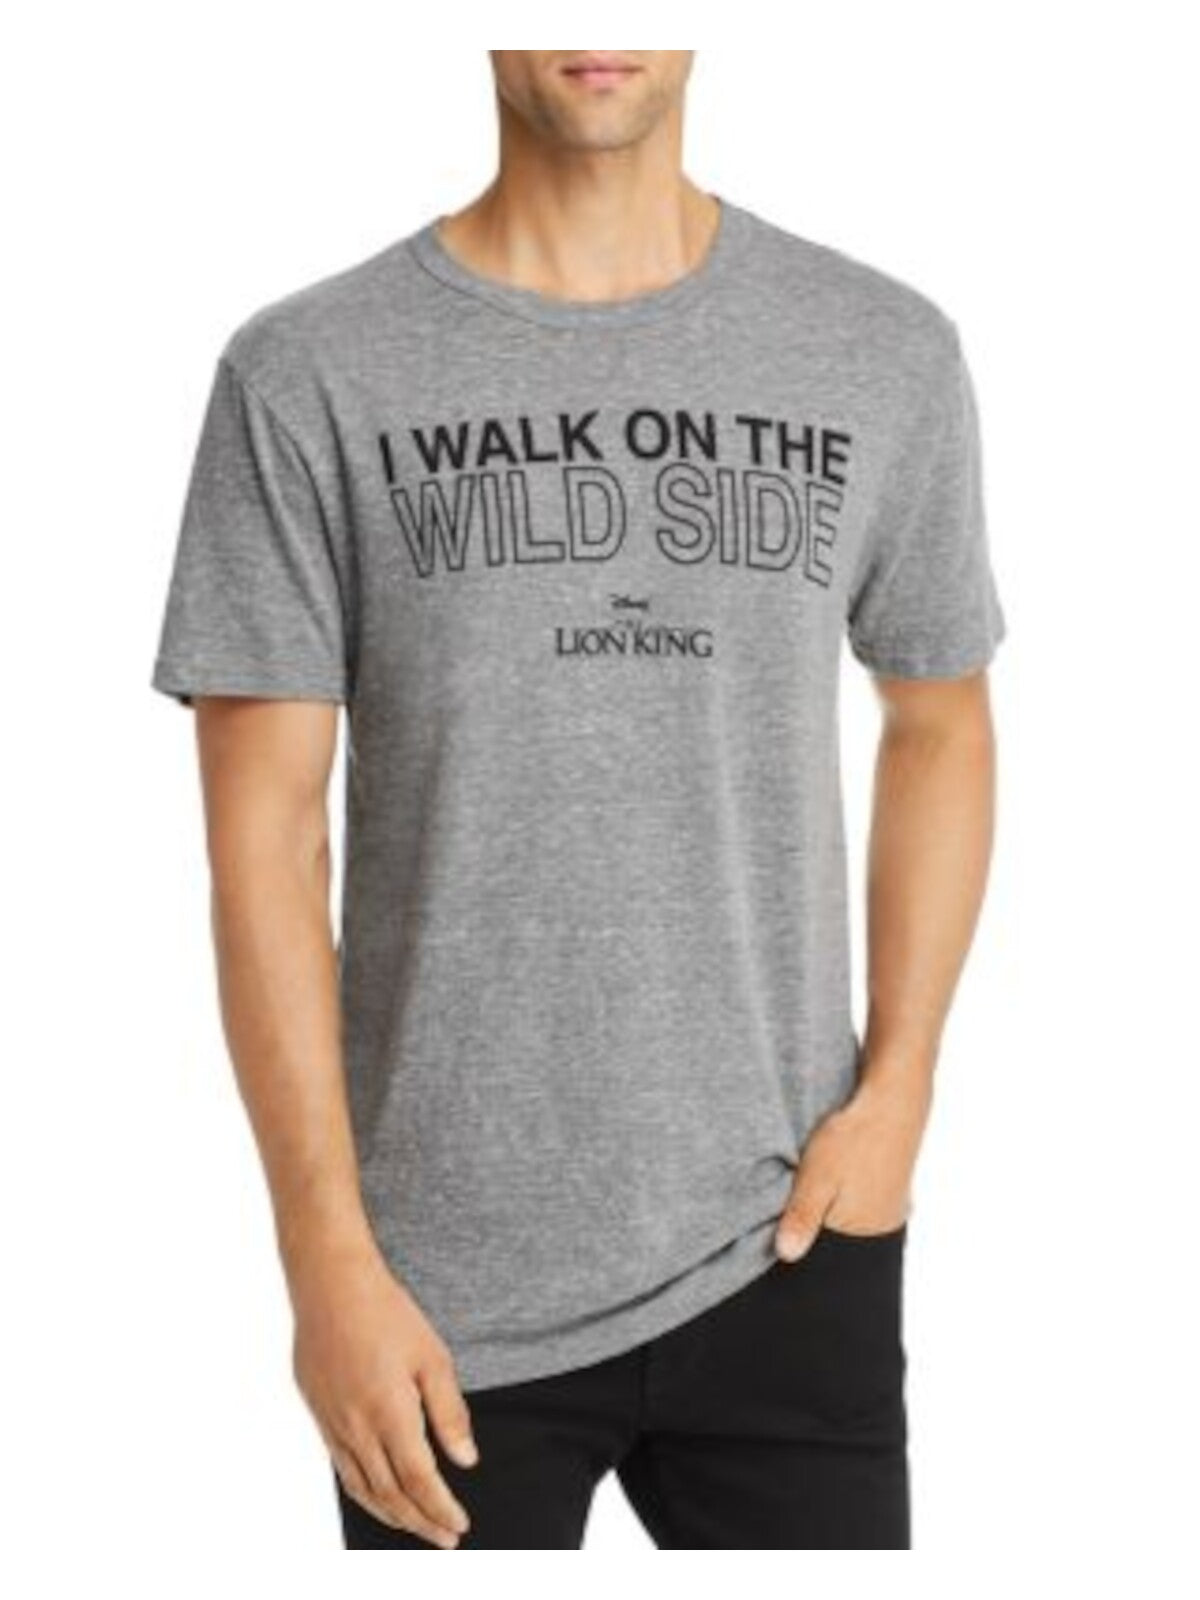 HYBRID APPAREL Mens Gray Lightweight, Logo Graphic Short Sleeve Classic Fit T-Shirt M